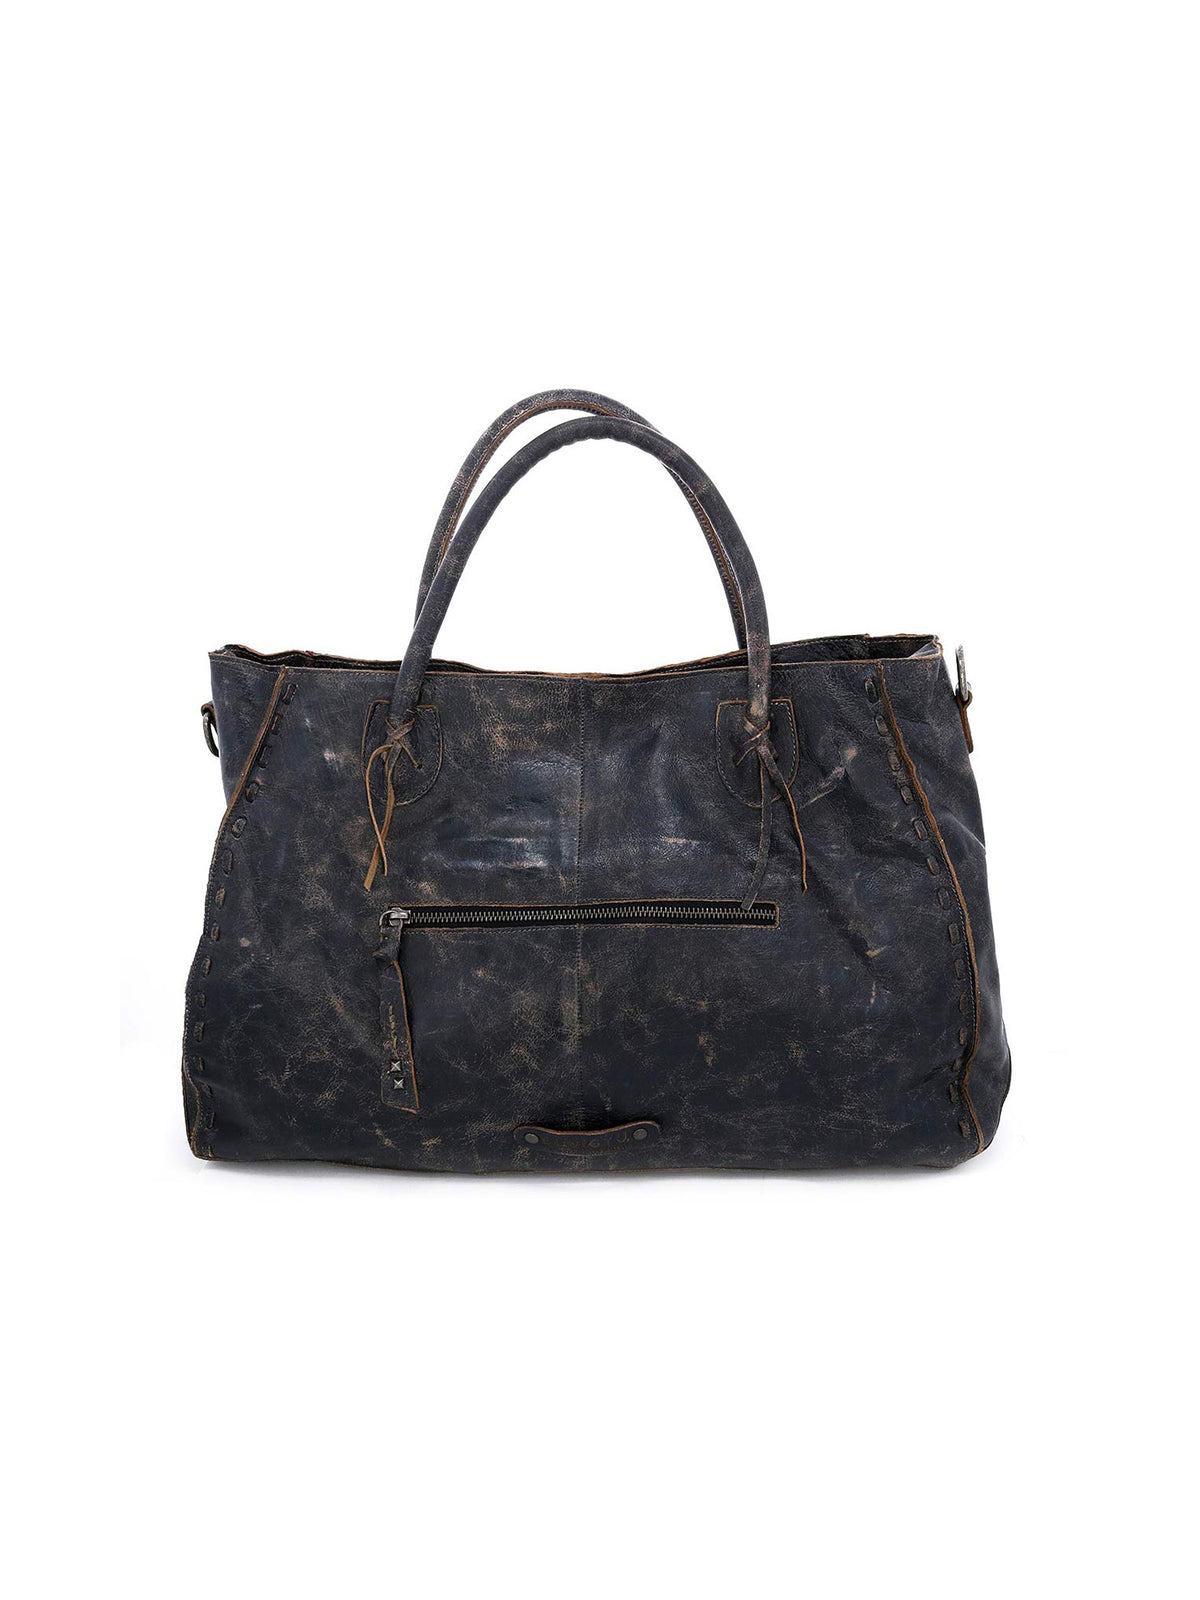 bedstu rockaway handbag in black lux